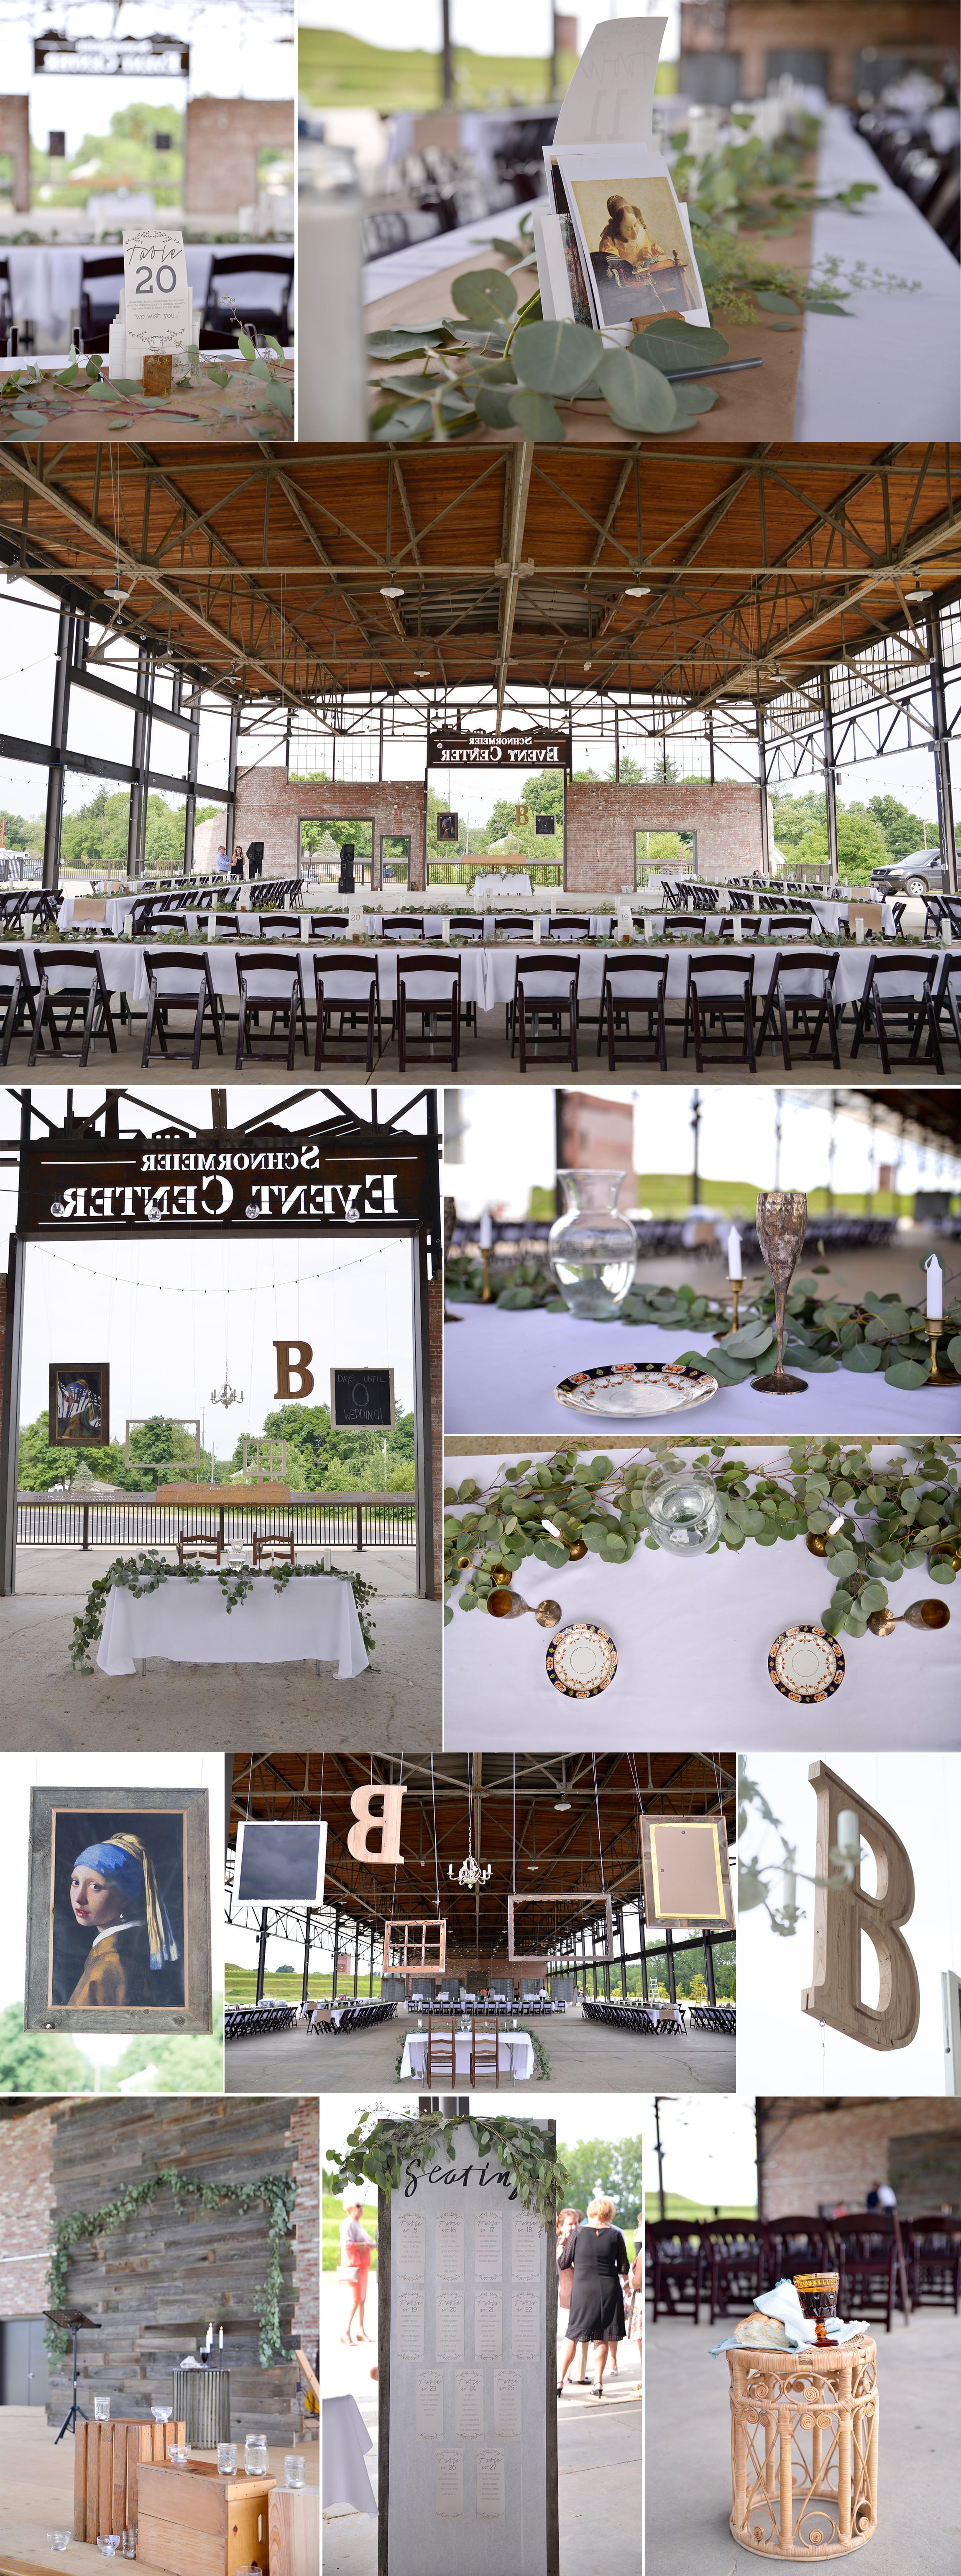 7-wedding in event center foundation park mt vernon ohio